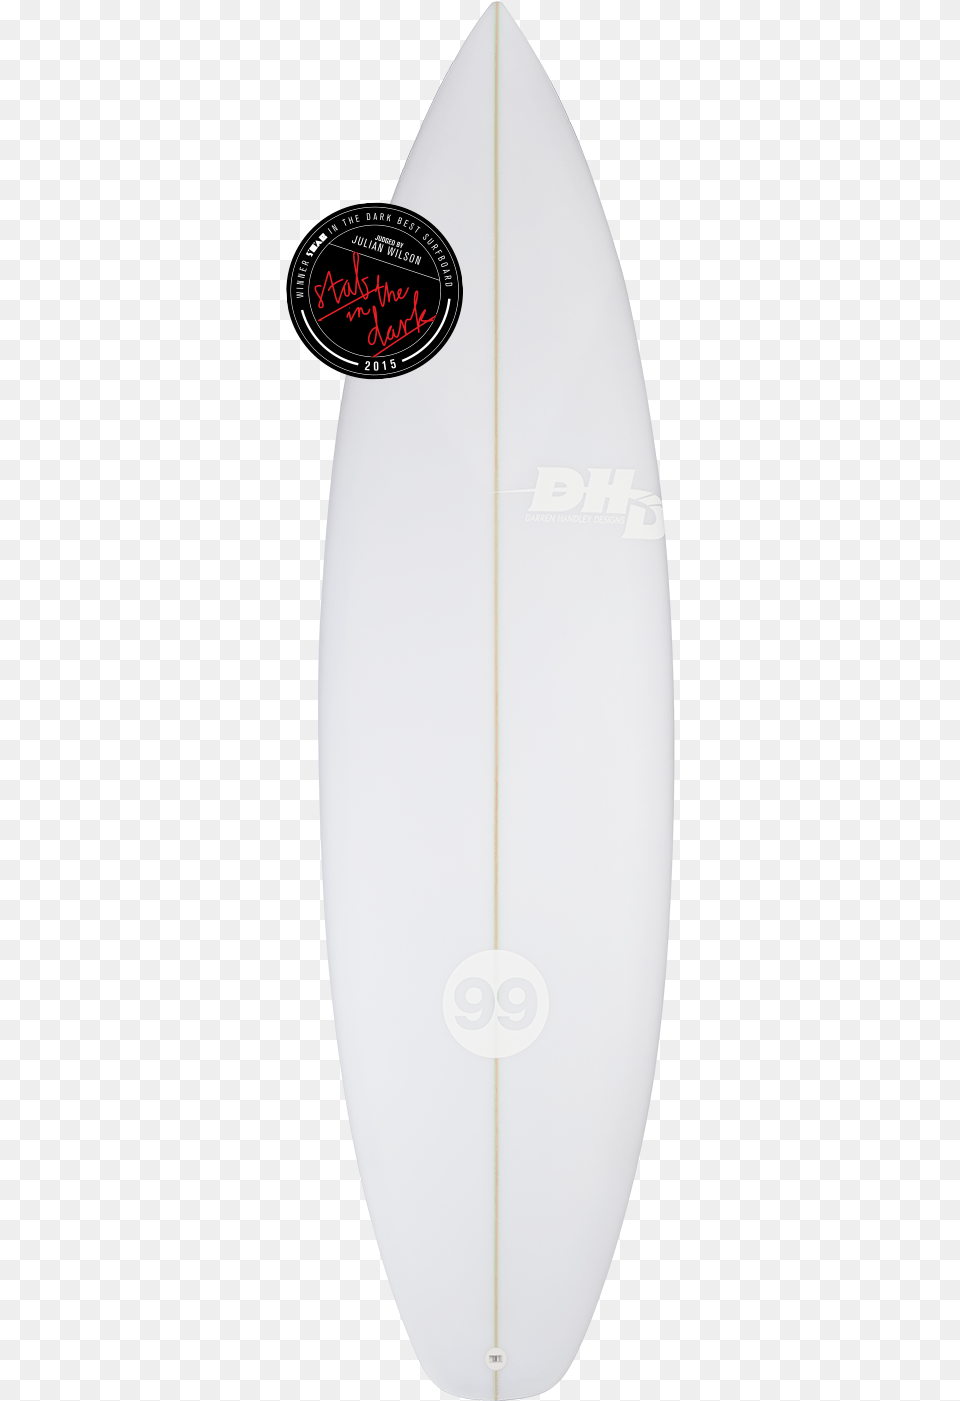 Stab In The Dark Skateboard Deck, Sea, Water, Surfing, Leisure Activities Png Image